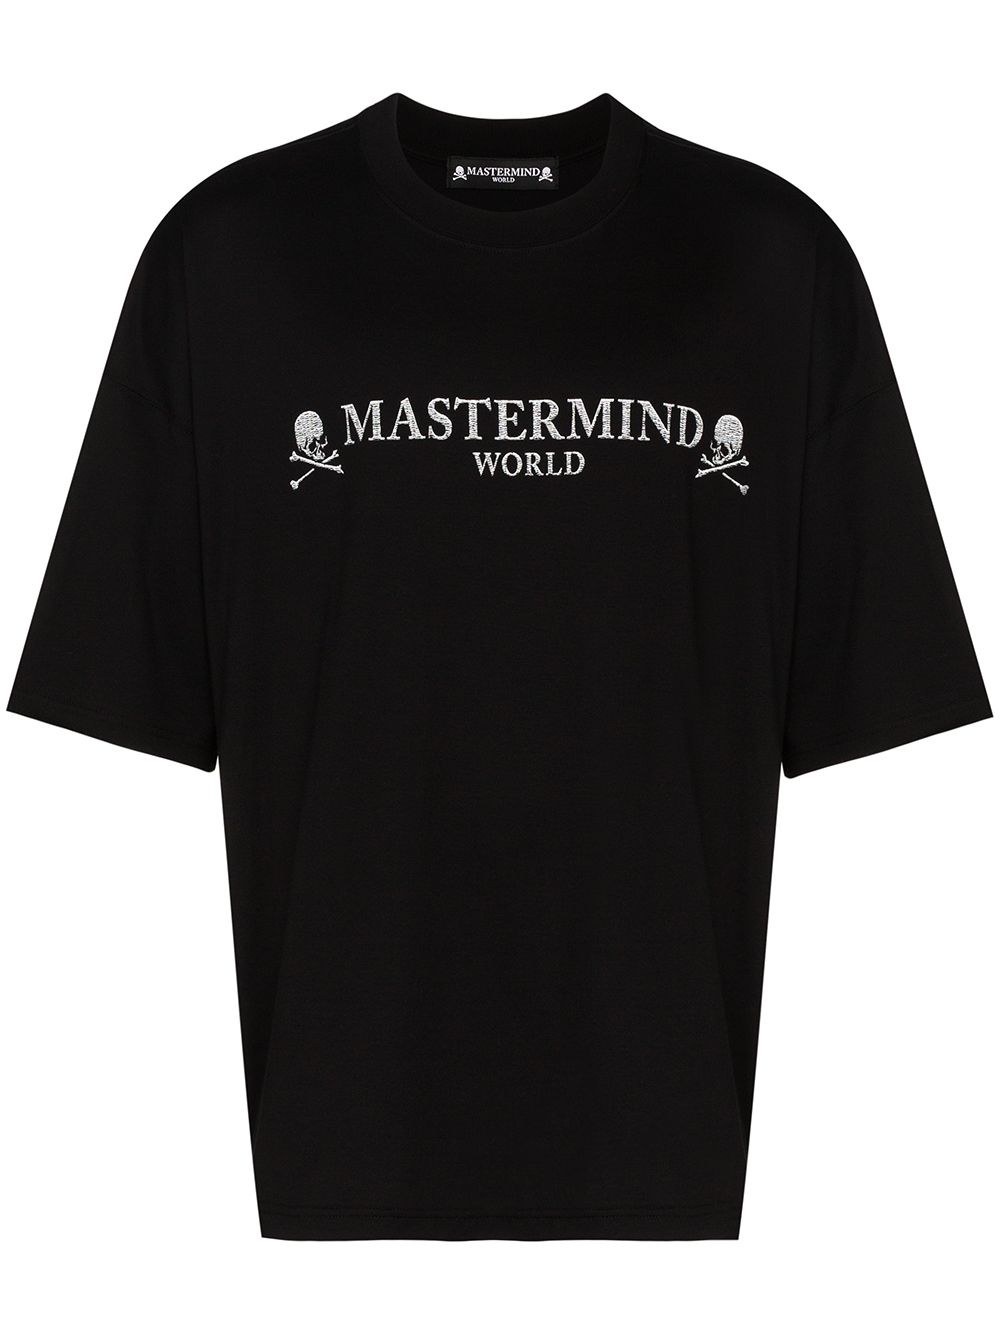 фото Mastermind japan футболка с вышитым логотипом